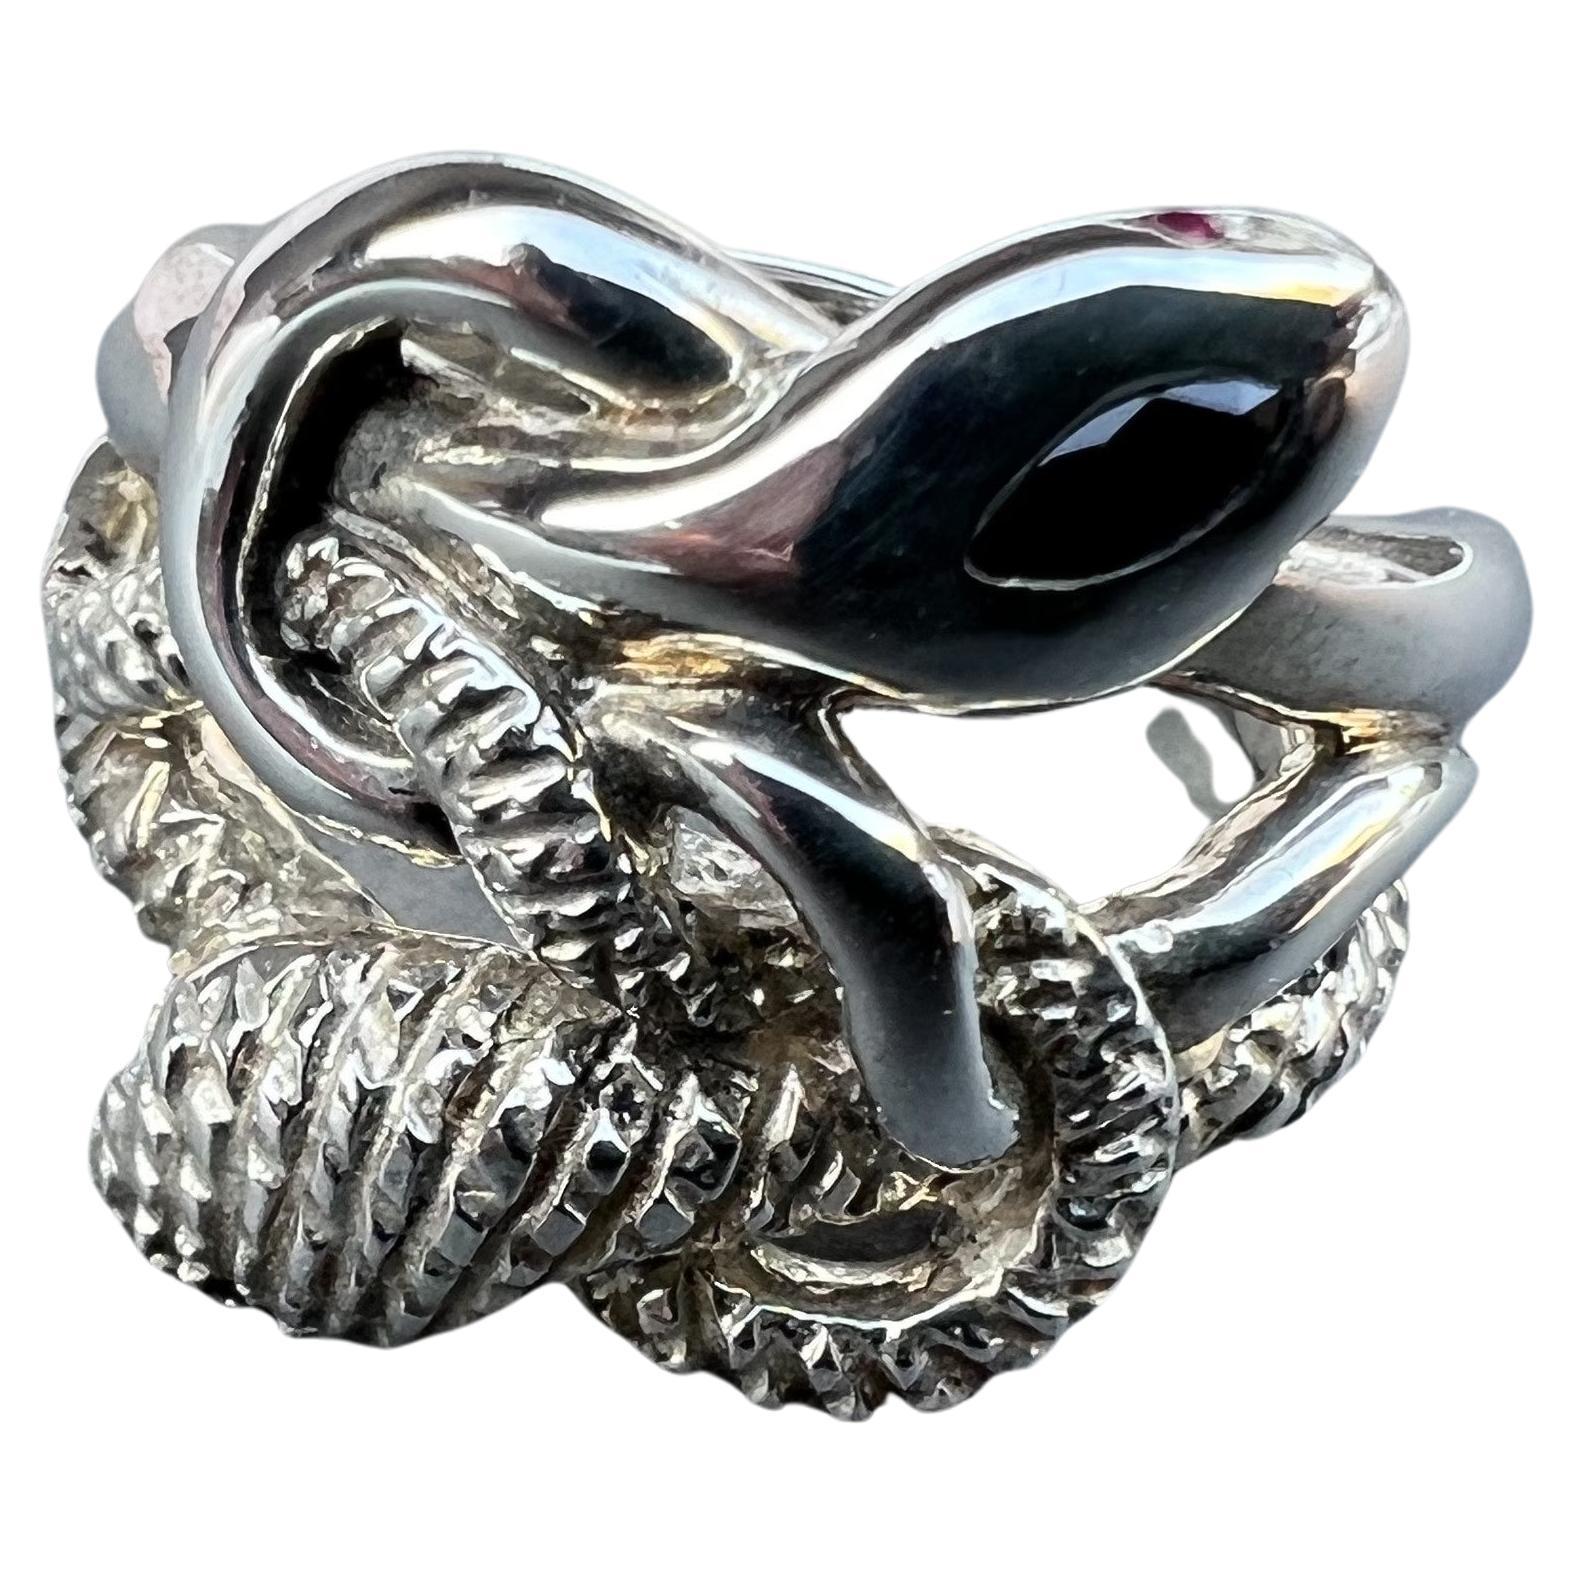 Animal Jewelry Snake Ring  Black Diamond Ruby Blue Sappgire Sterling Silver Cocktail Ring J Dauphin

J DAUPHIN 